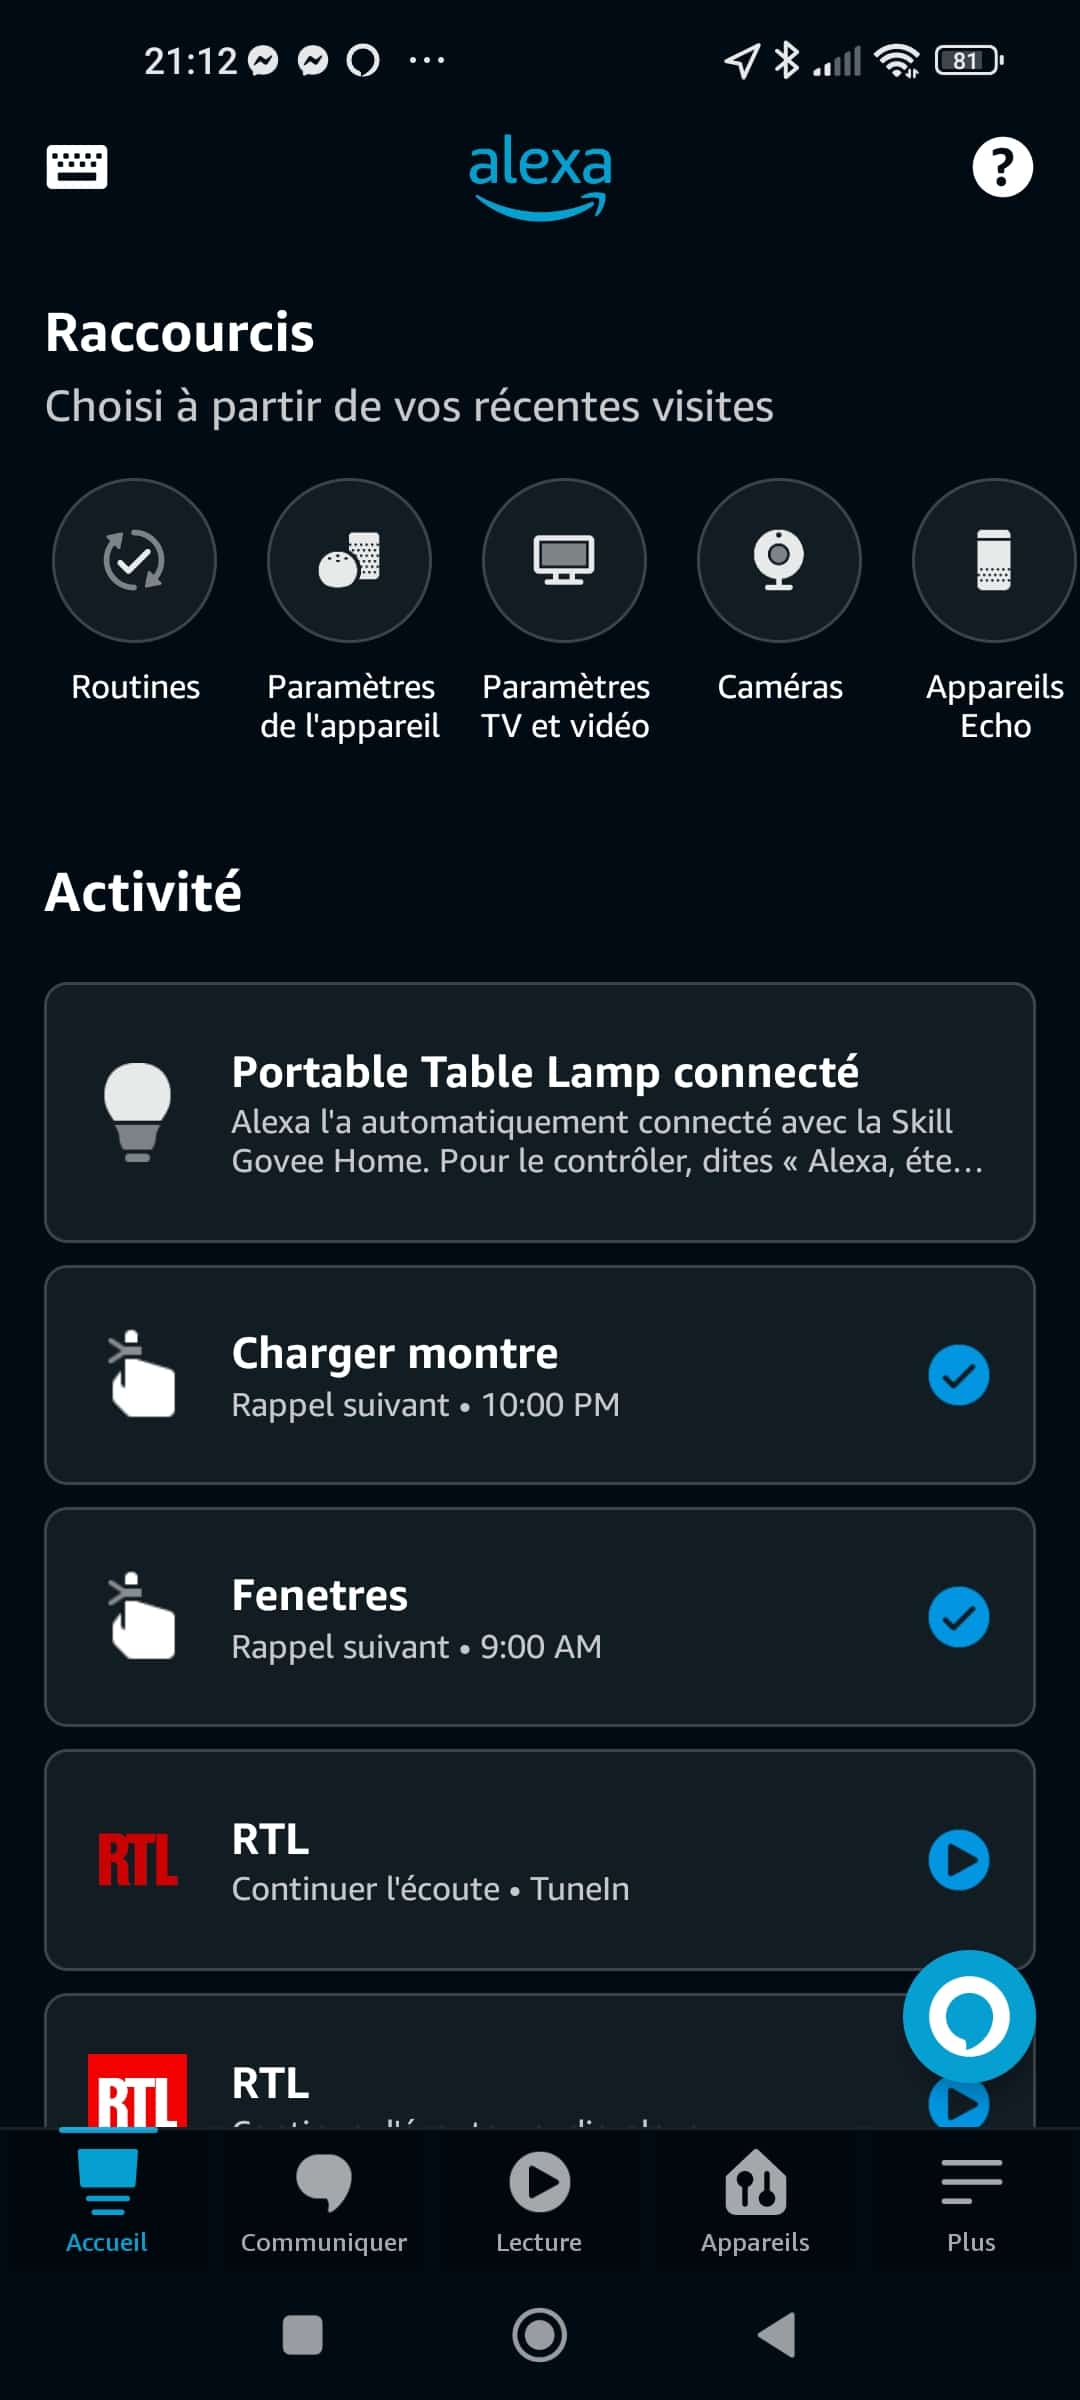 Smart Accueil RGB LED Rotin Couvercle Lampe Google Alexa App